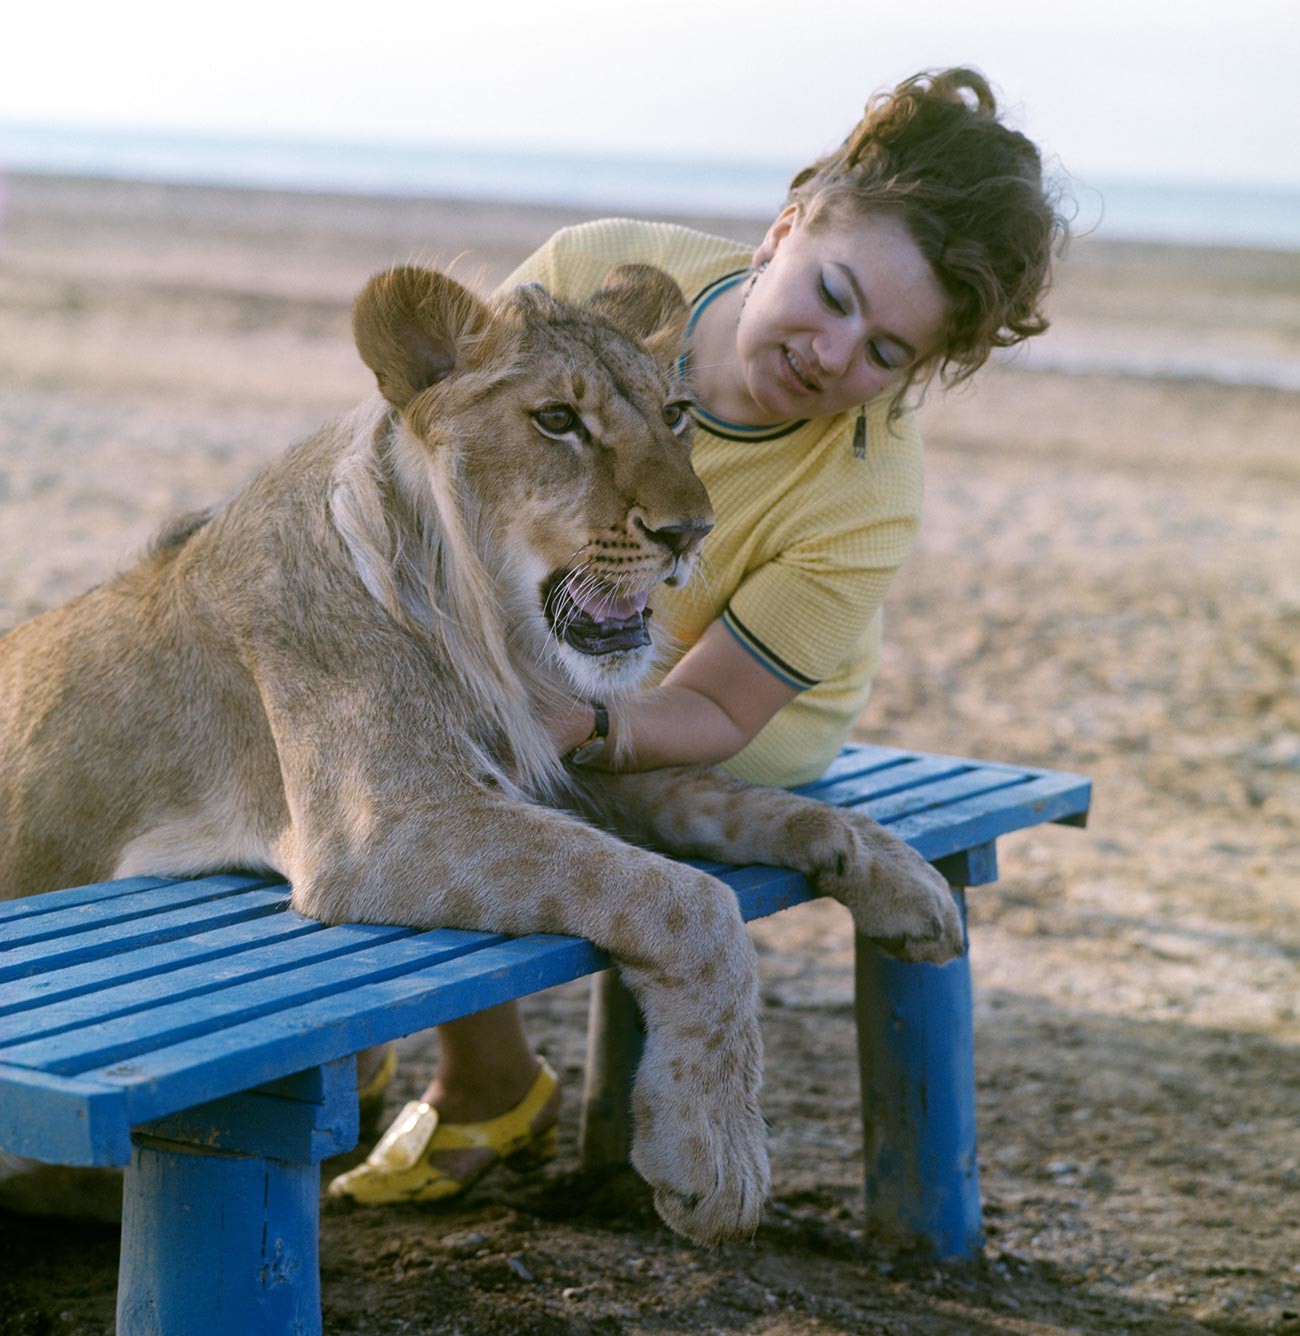 Nina Berberova avec son lion de compagnie. Rive de la mer Caspienne